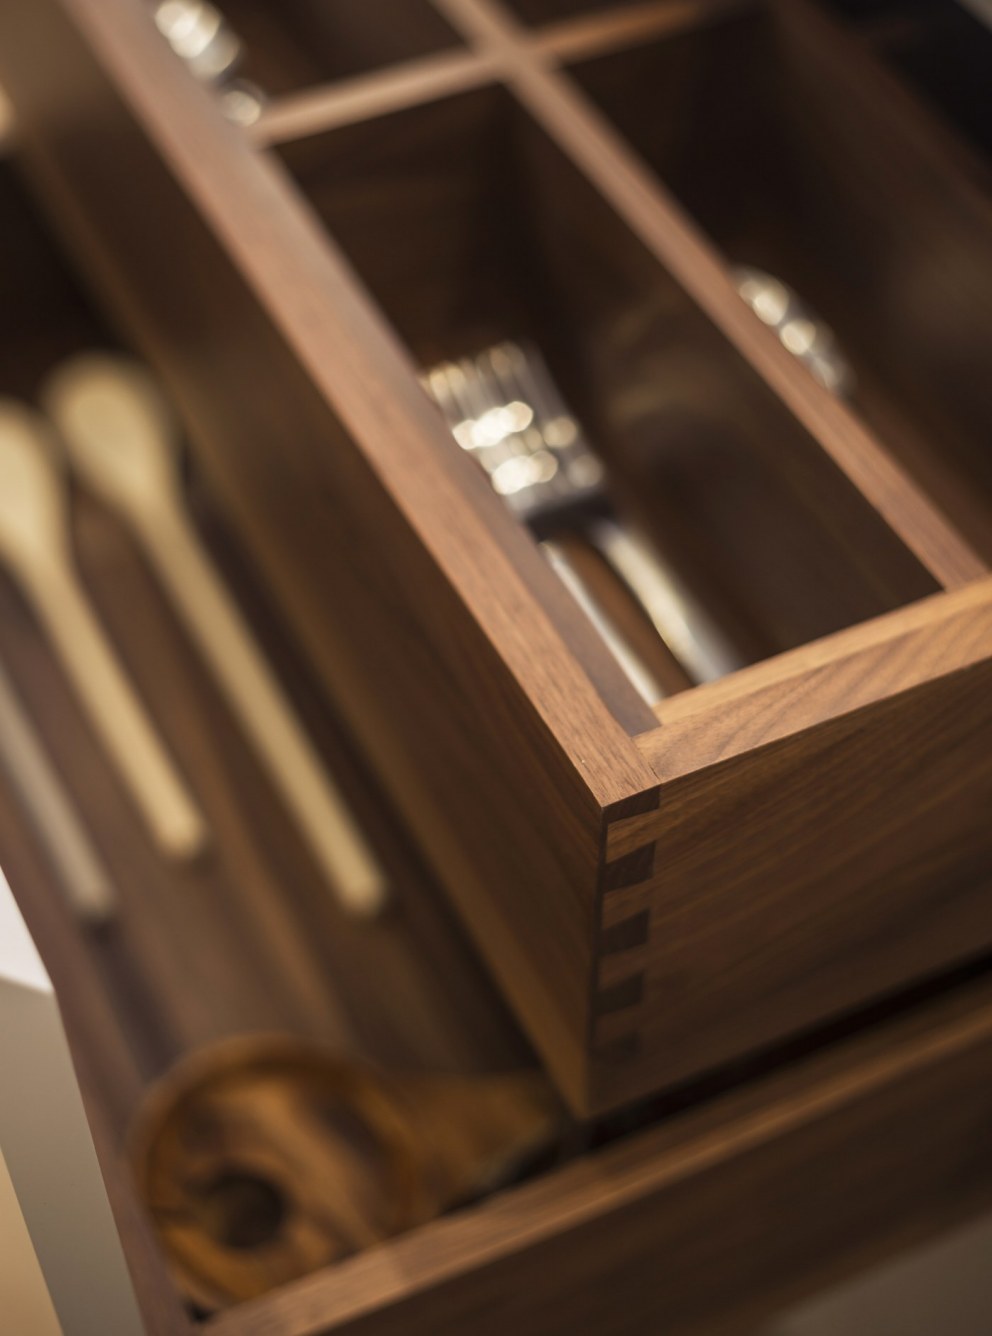 3000 sqft Townhouse - Highgate | Dovetailed walnut cutlery drawer detail in bespoke kitchen  | Interior Designers